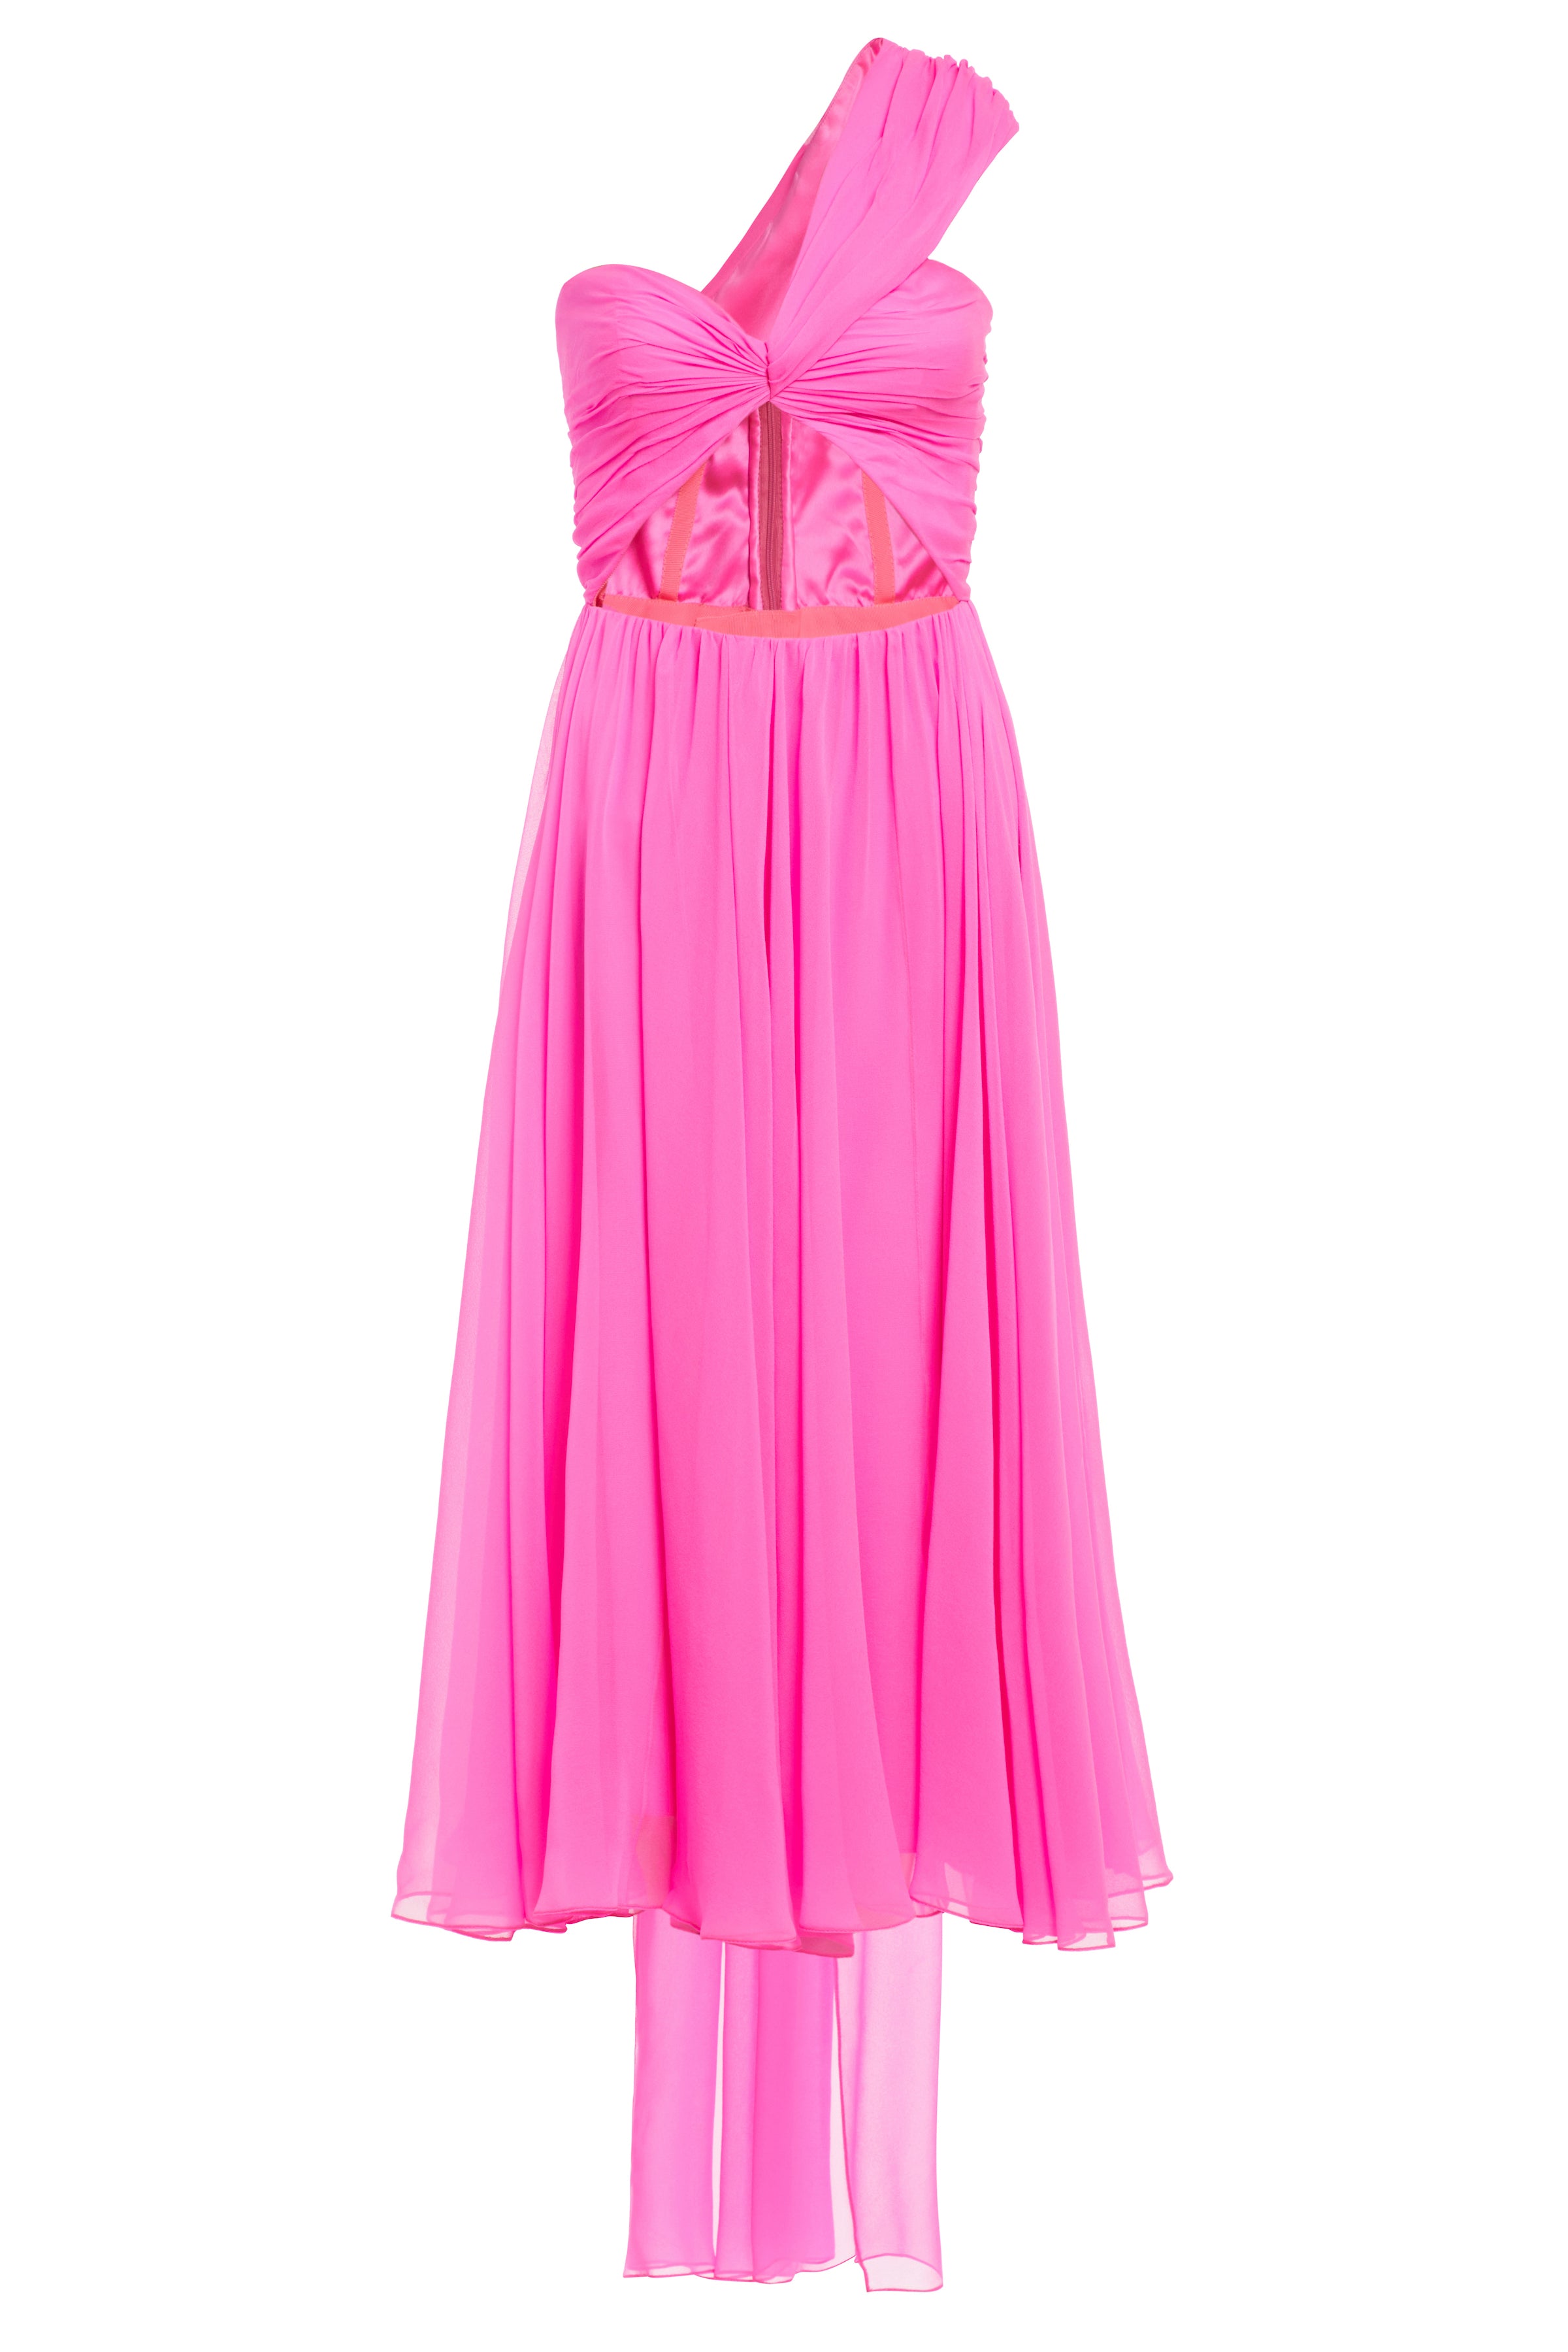 Pink Floral One Shoulder Draped Chiffon Dress